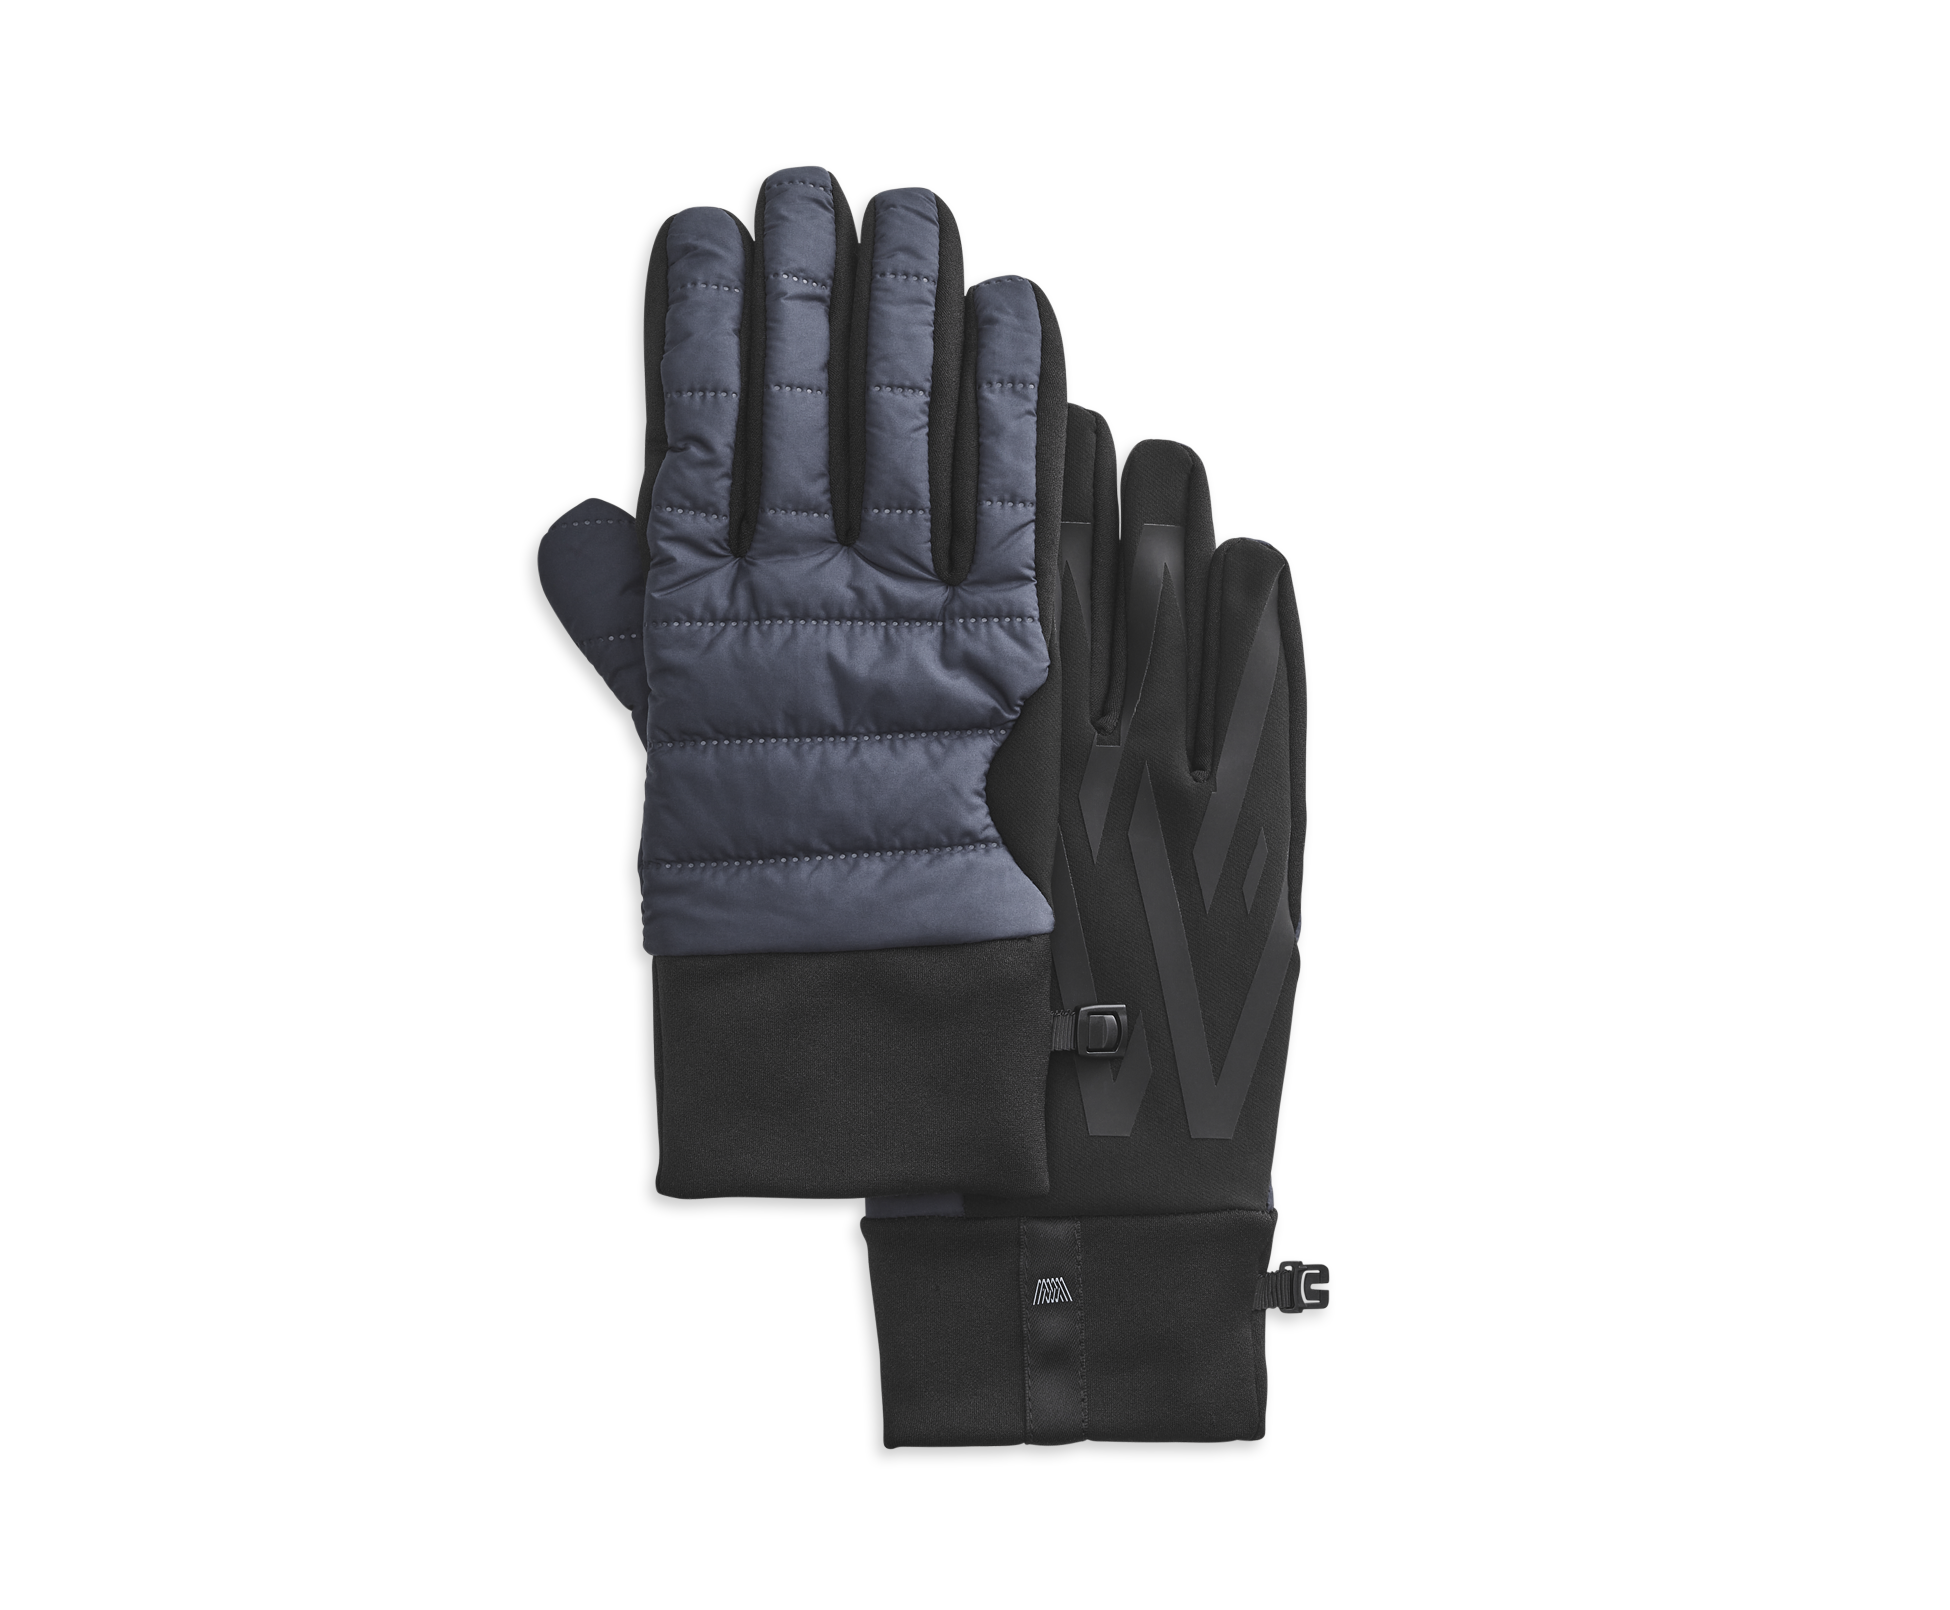 WARMKNIT AIR Performance Glove Total Eclipse Blue, Size: S/M Mack Weldon